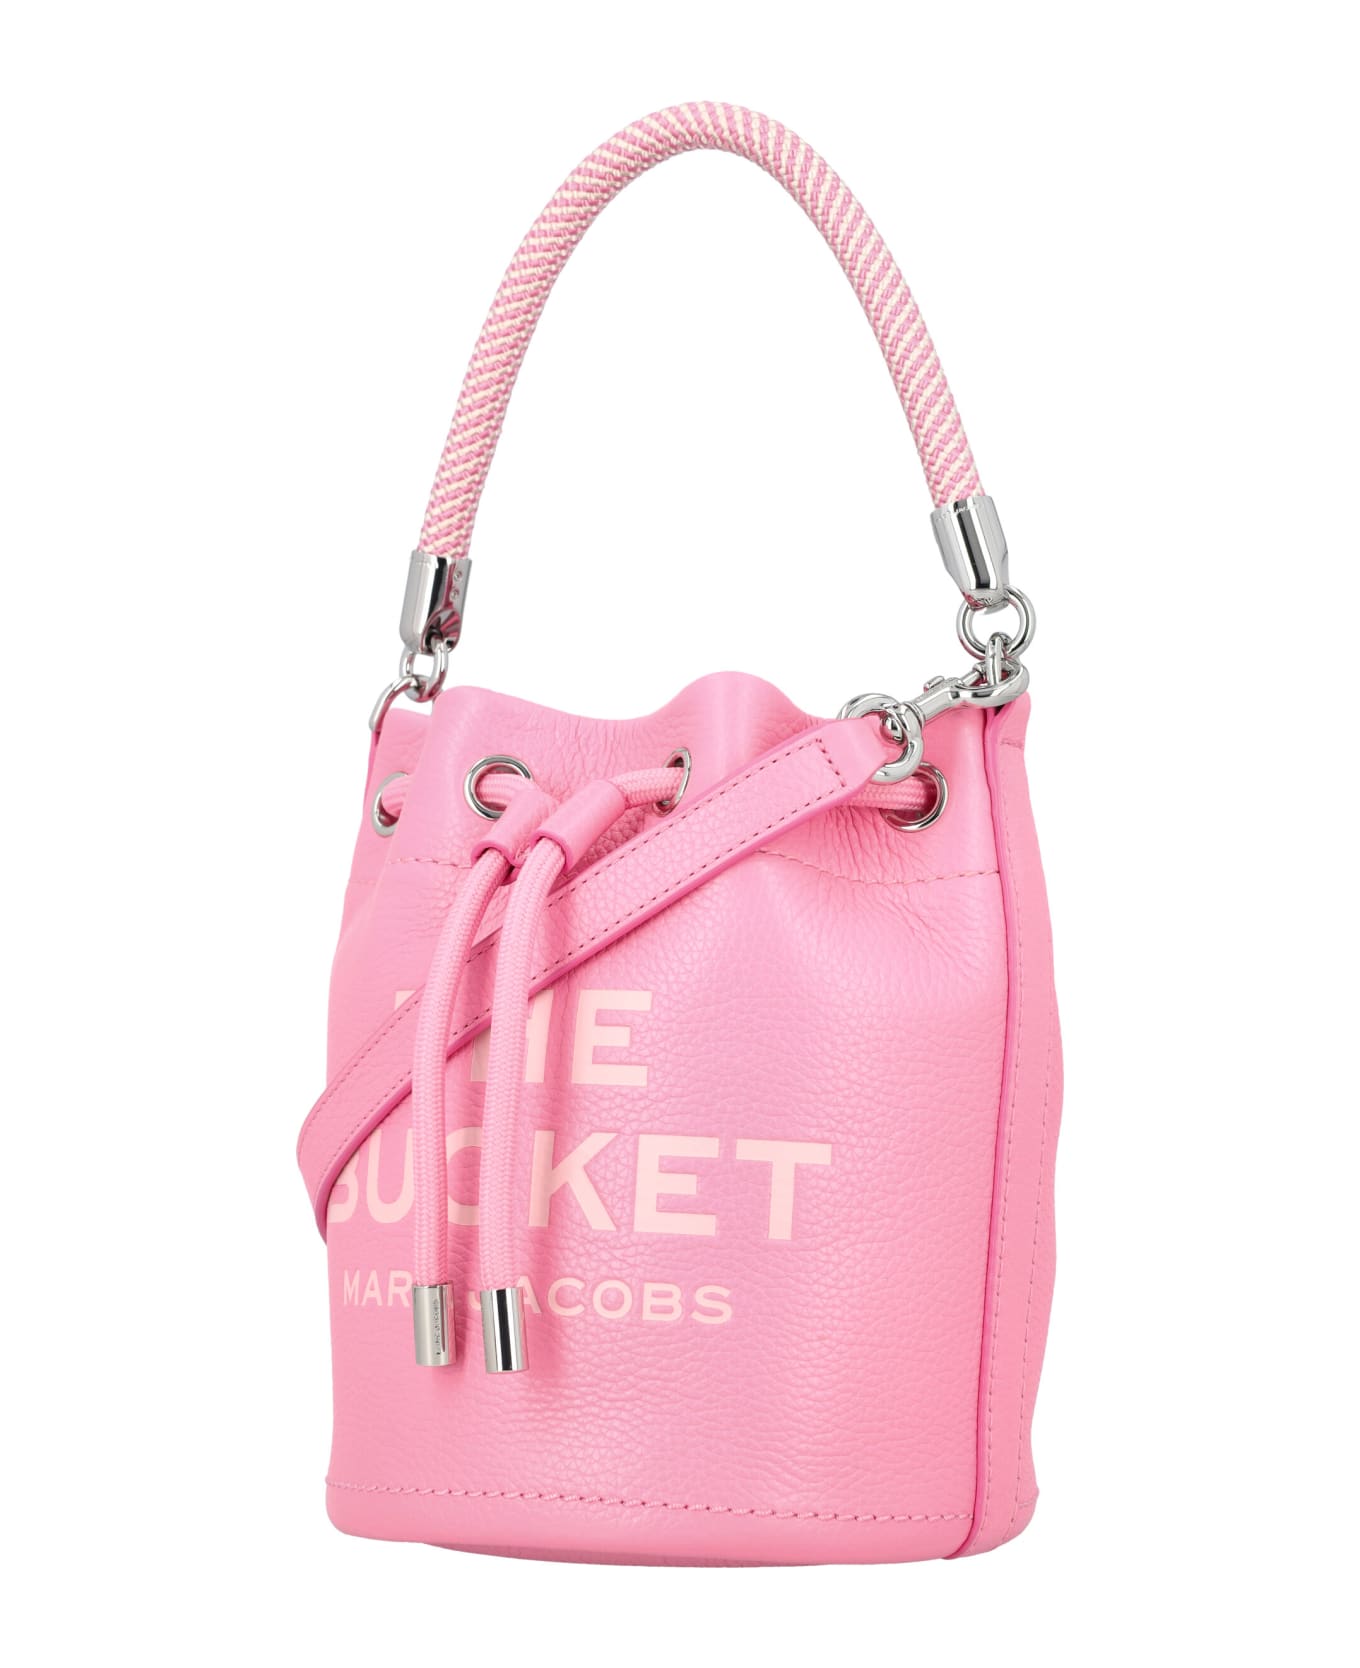 Marc Jacobs The Bucket Bag - PETAL PINK